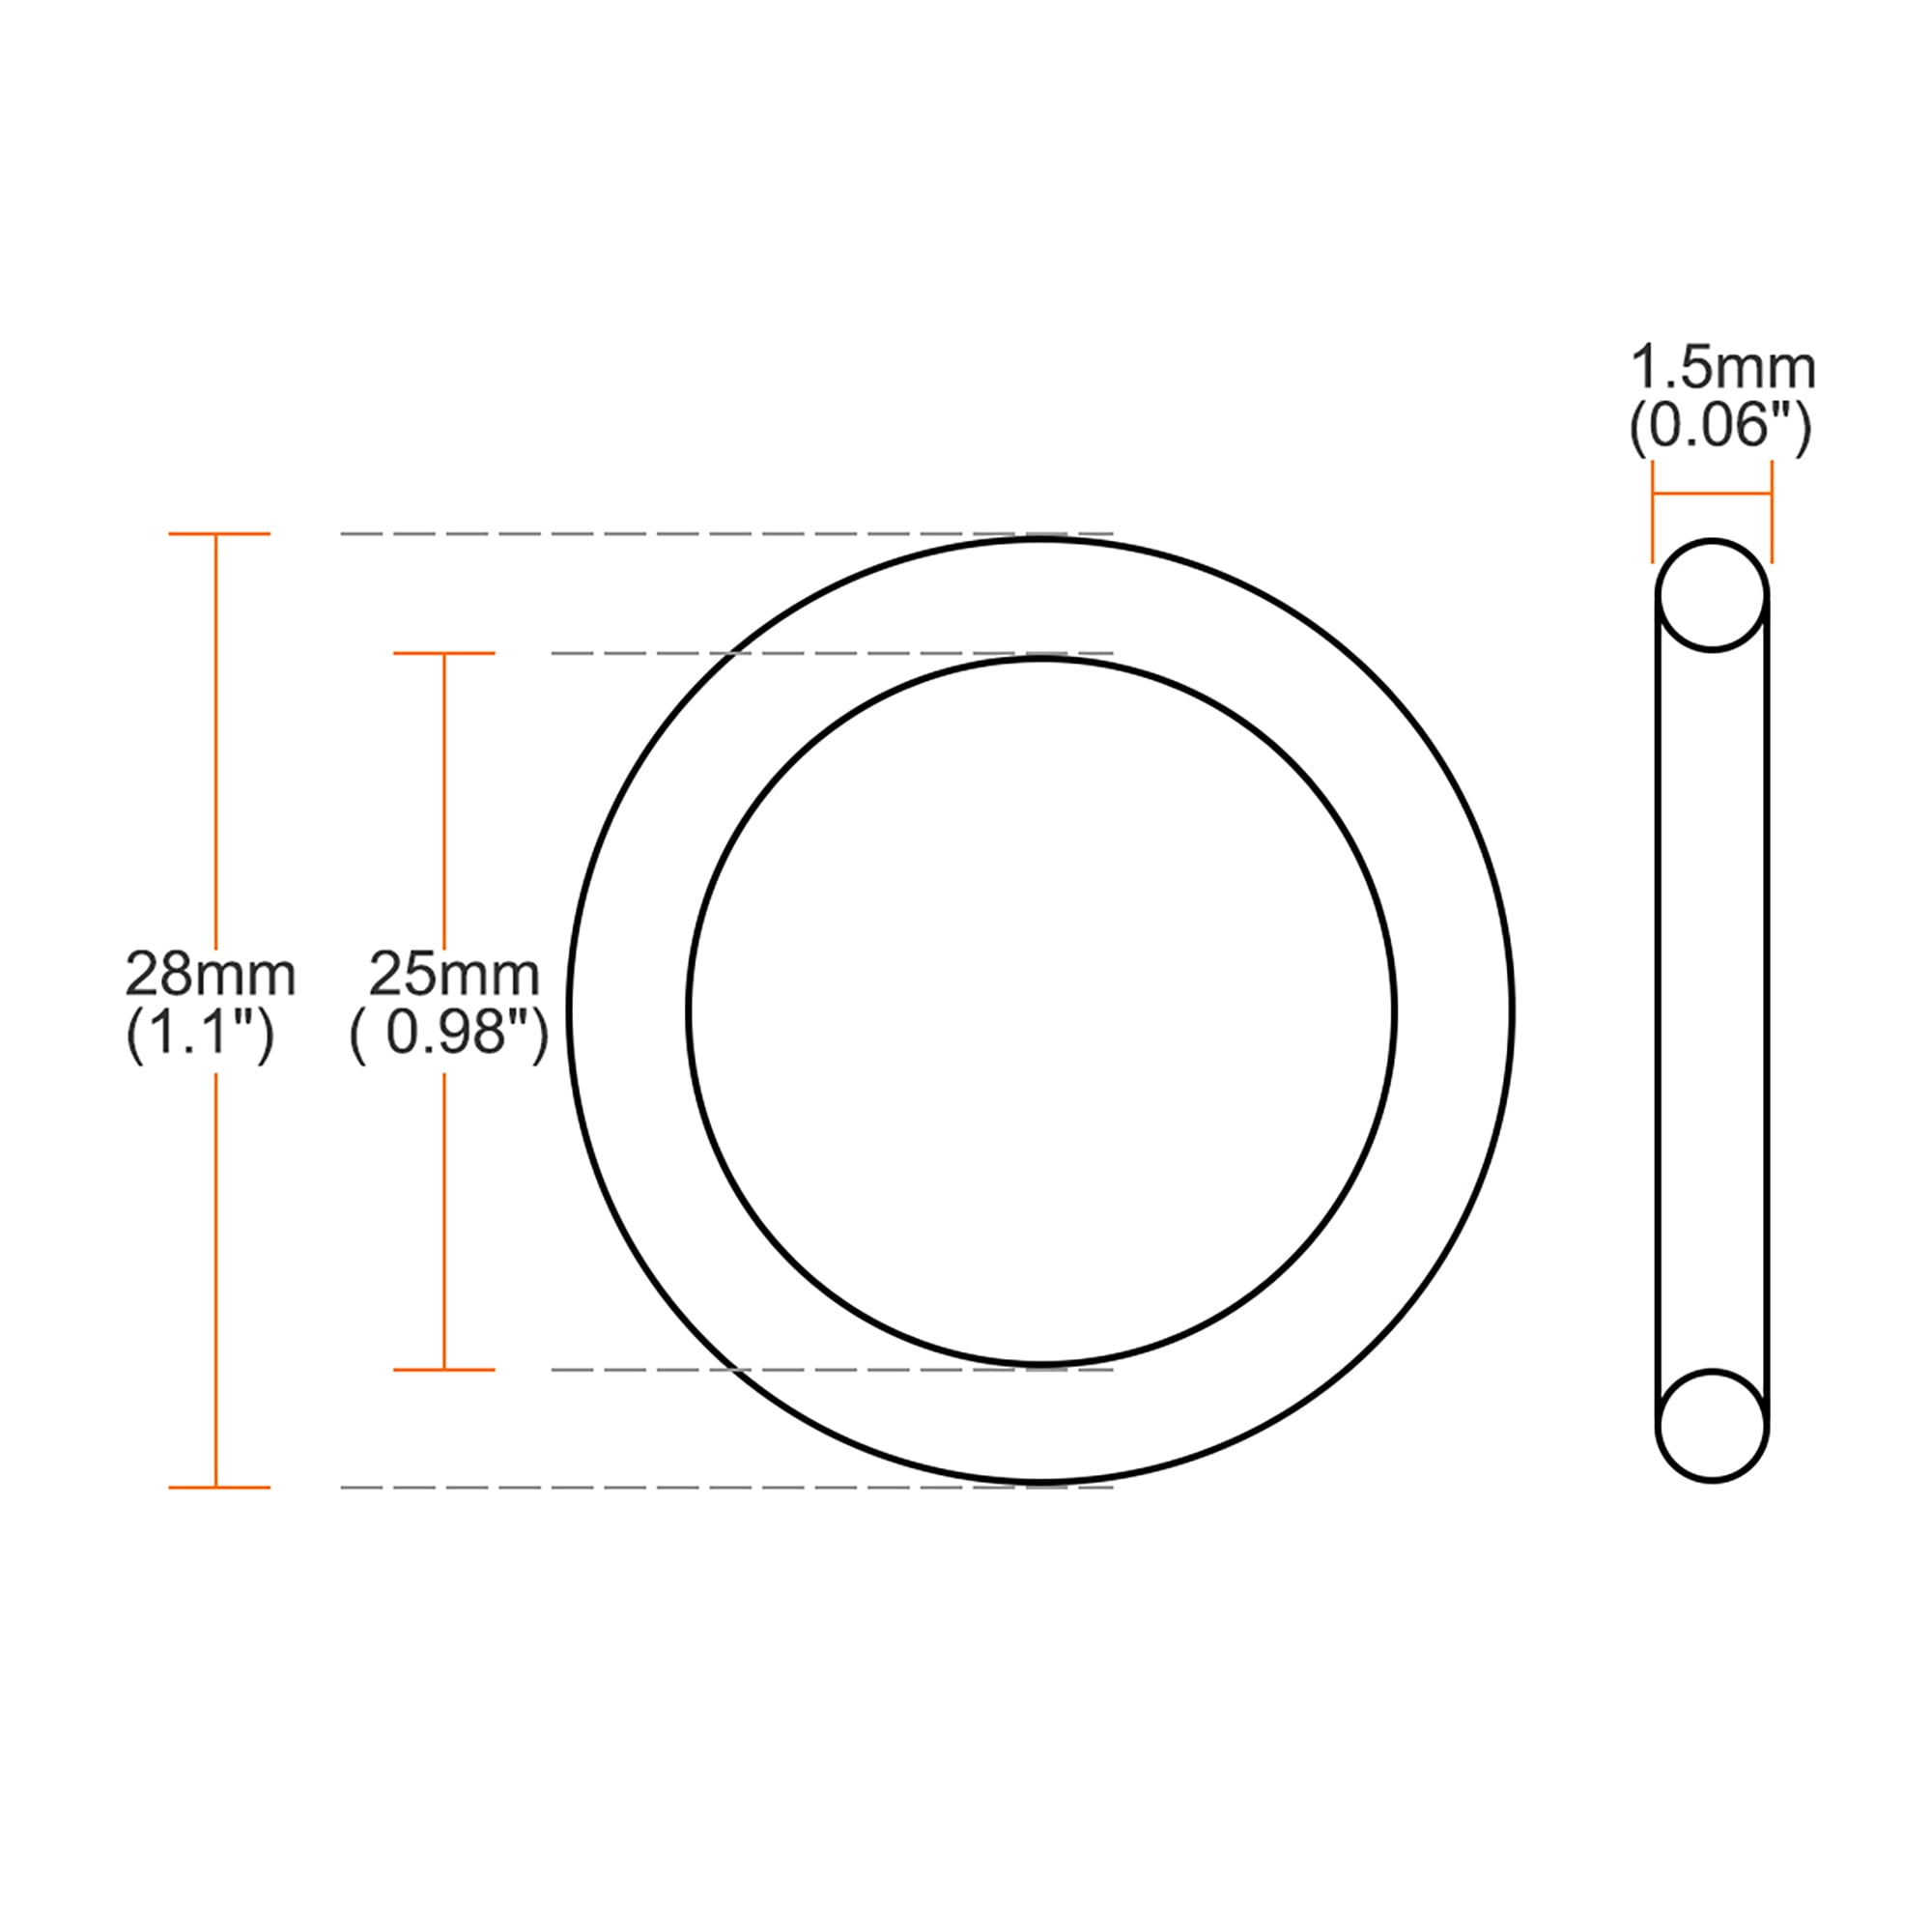 3 Pcs x Black Silicone Rubber O-Ring For LED Flashlight Φ13-51 x 1.5mm 